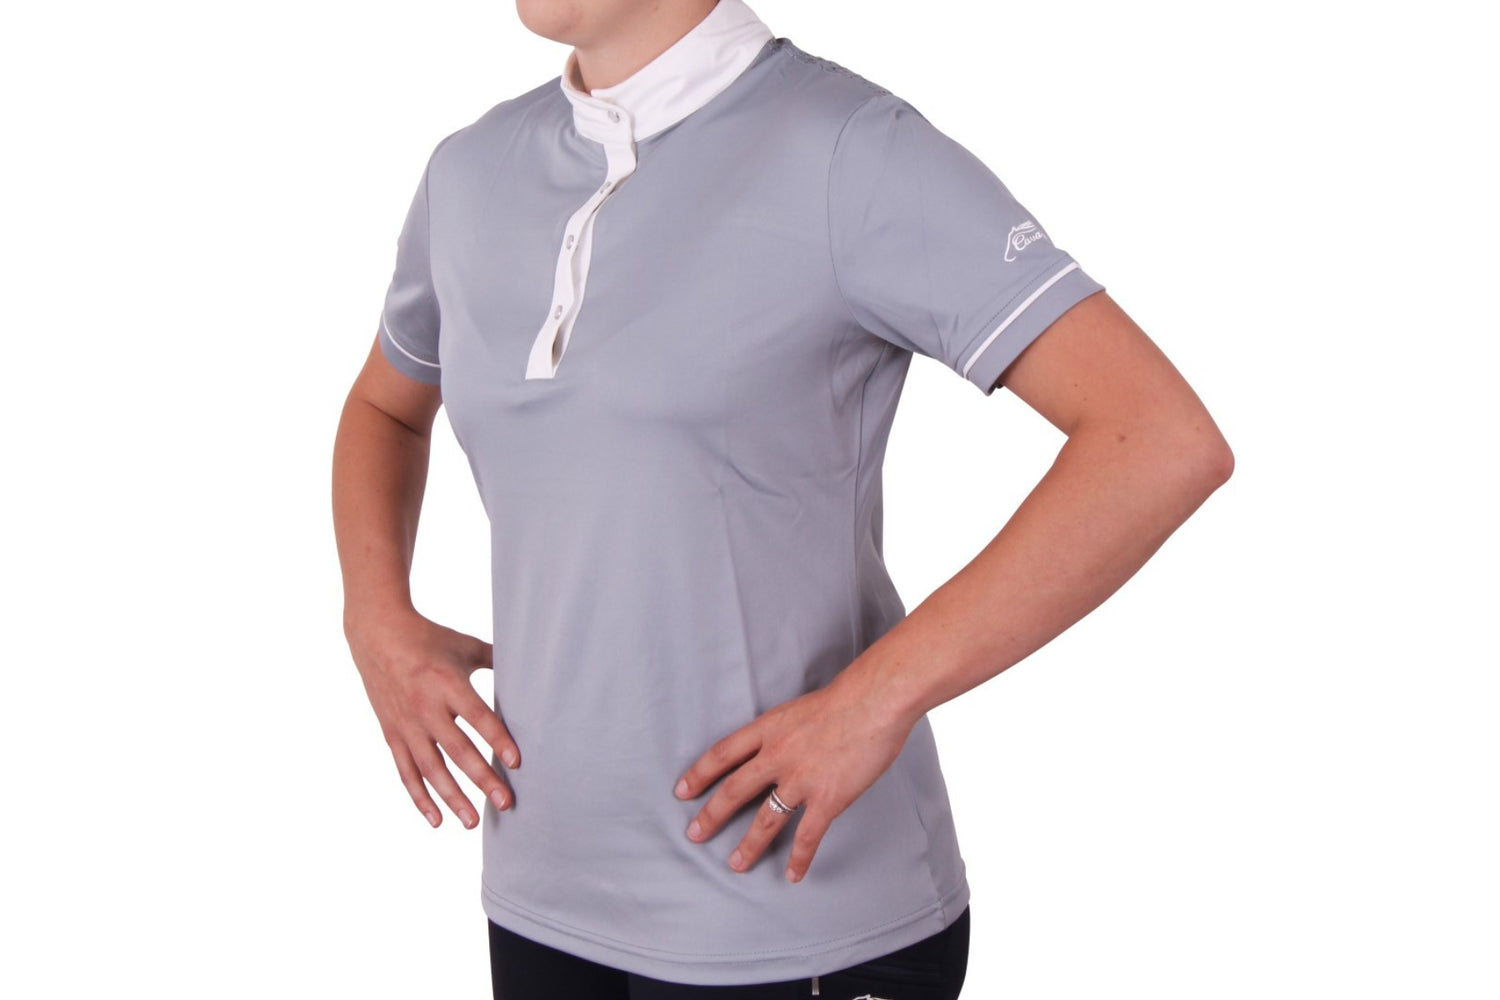 Cavallino Competition Riding Shirt Short Sleeve